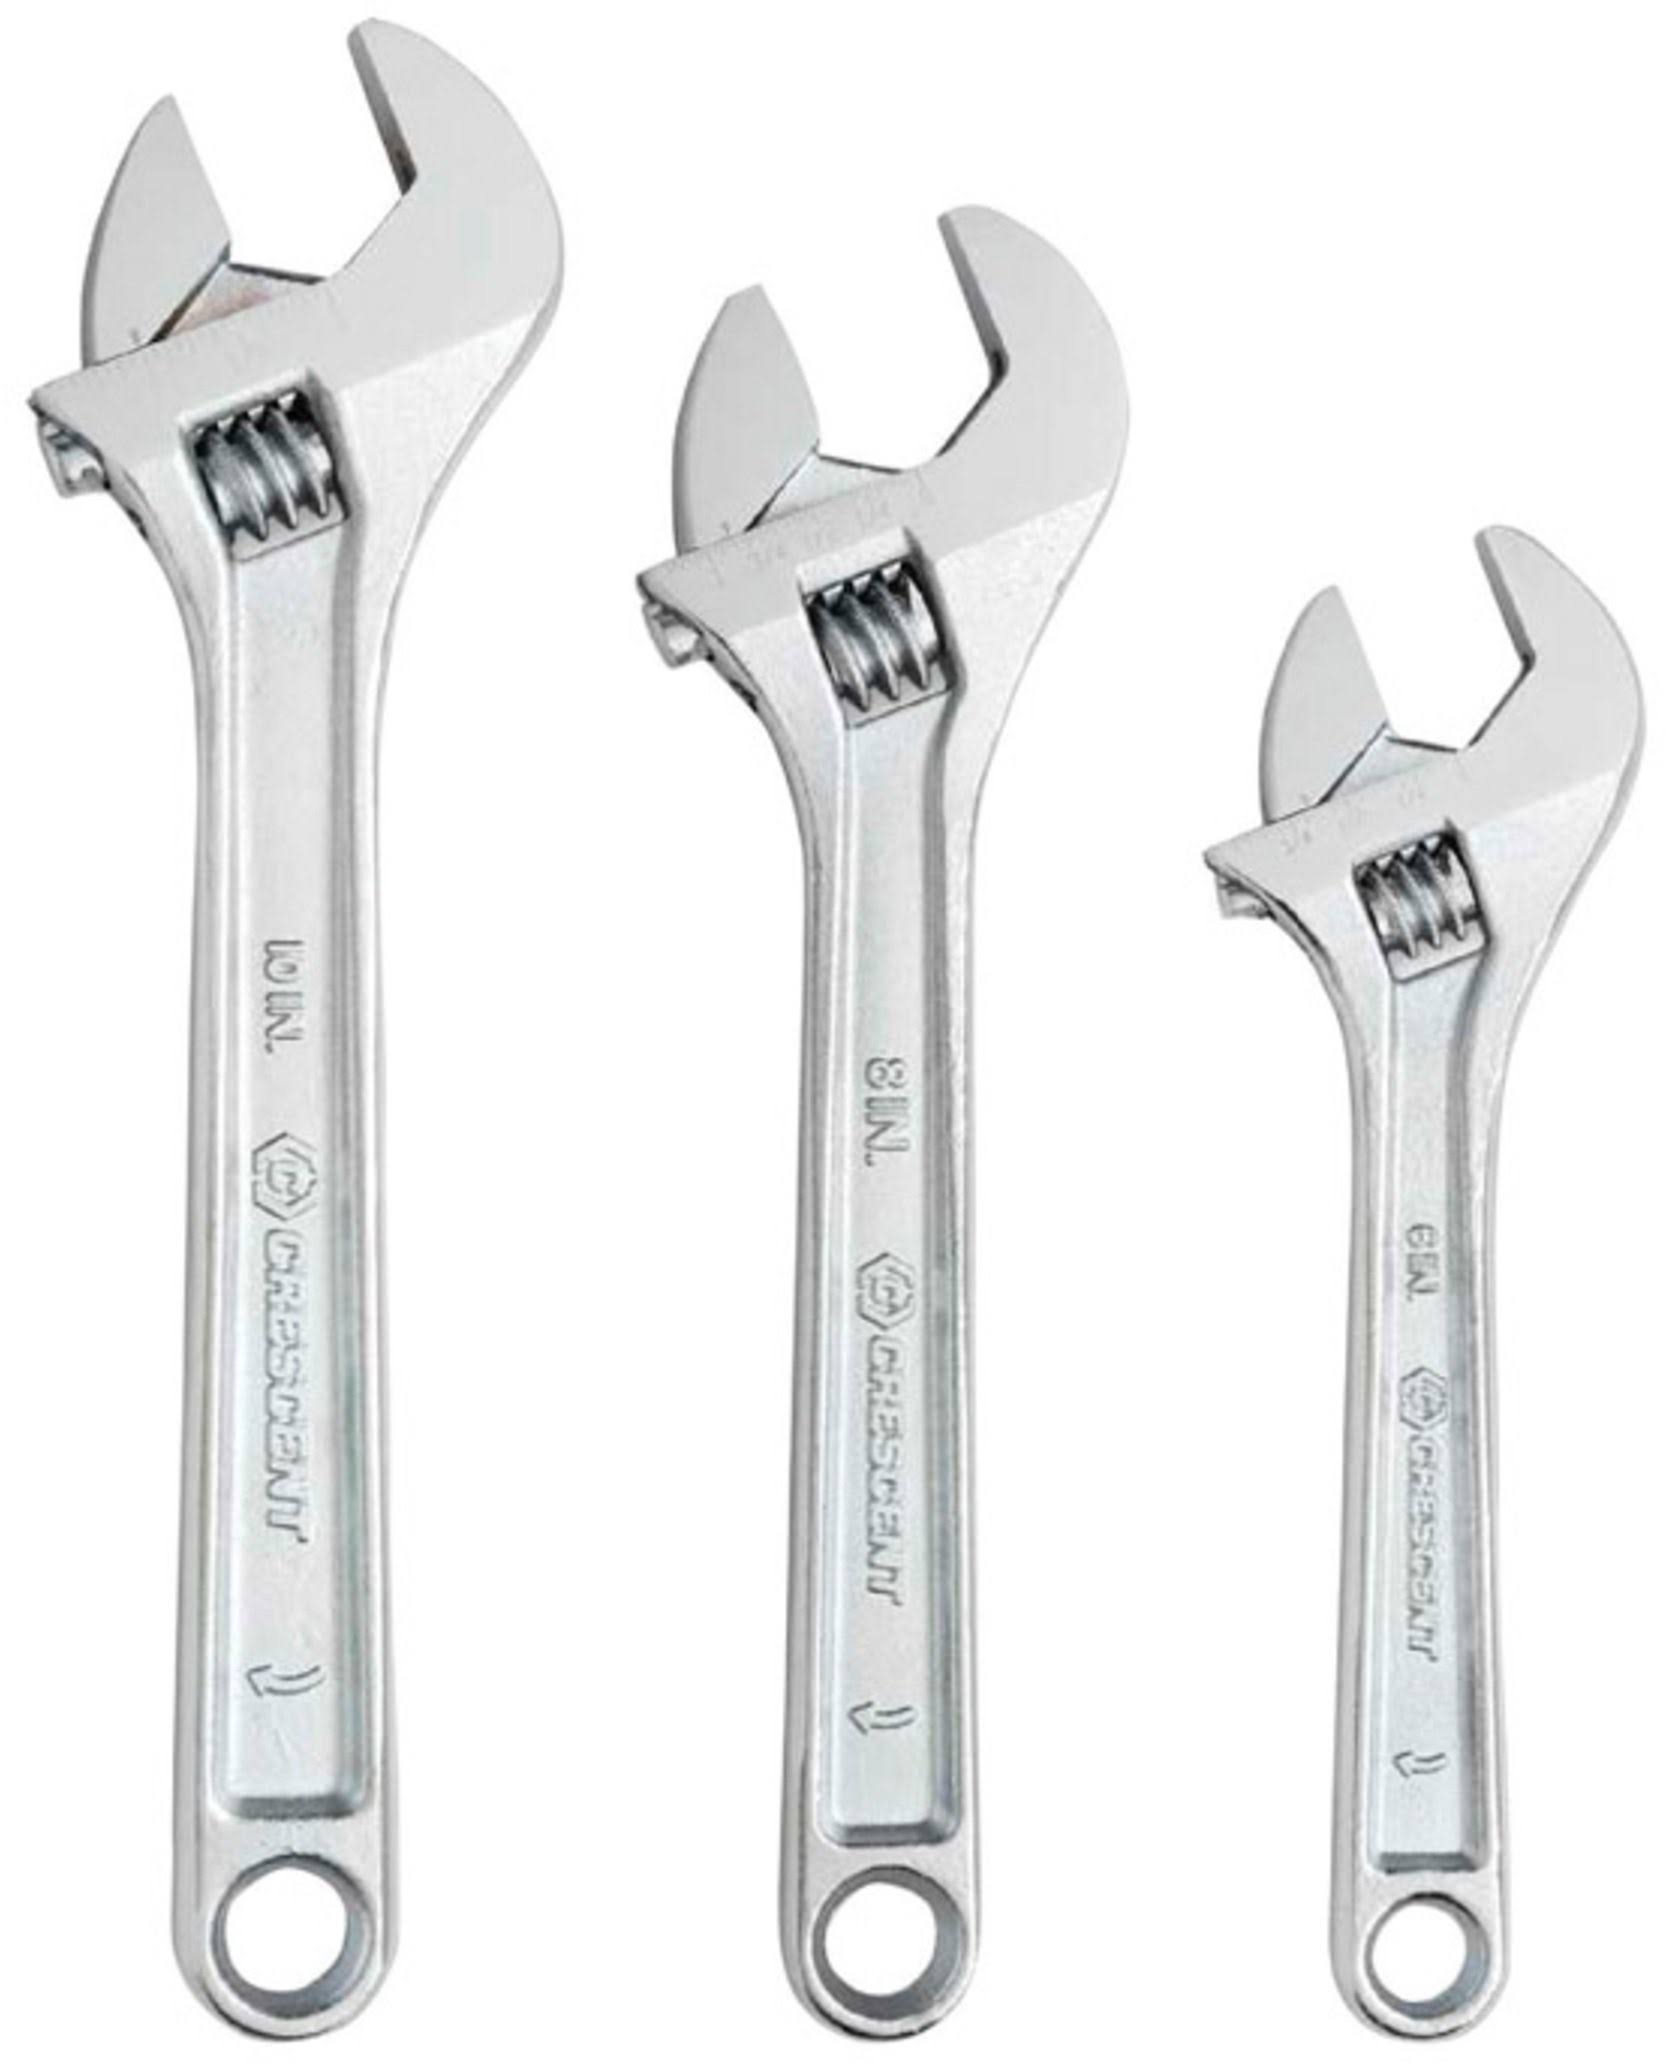 Crescent Adjustable Wrench Set - 3pcs, 6", 8" & 10"